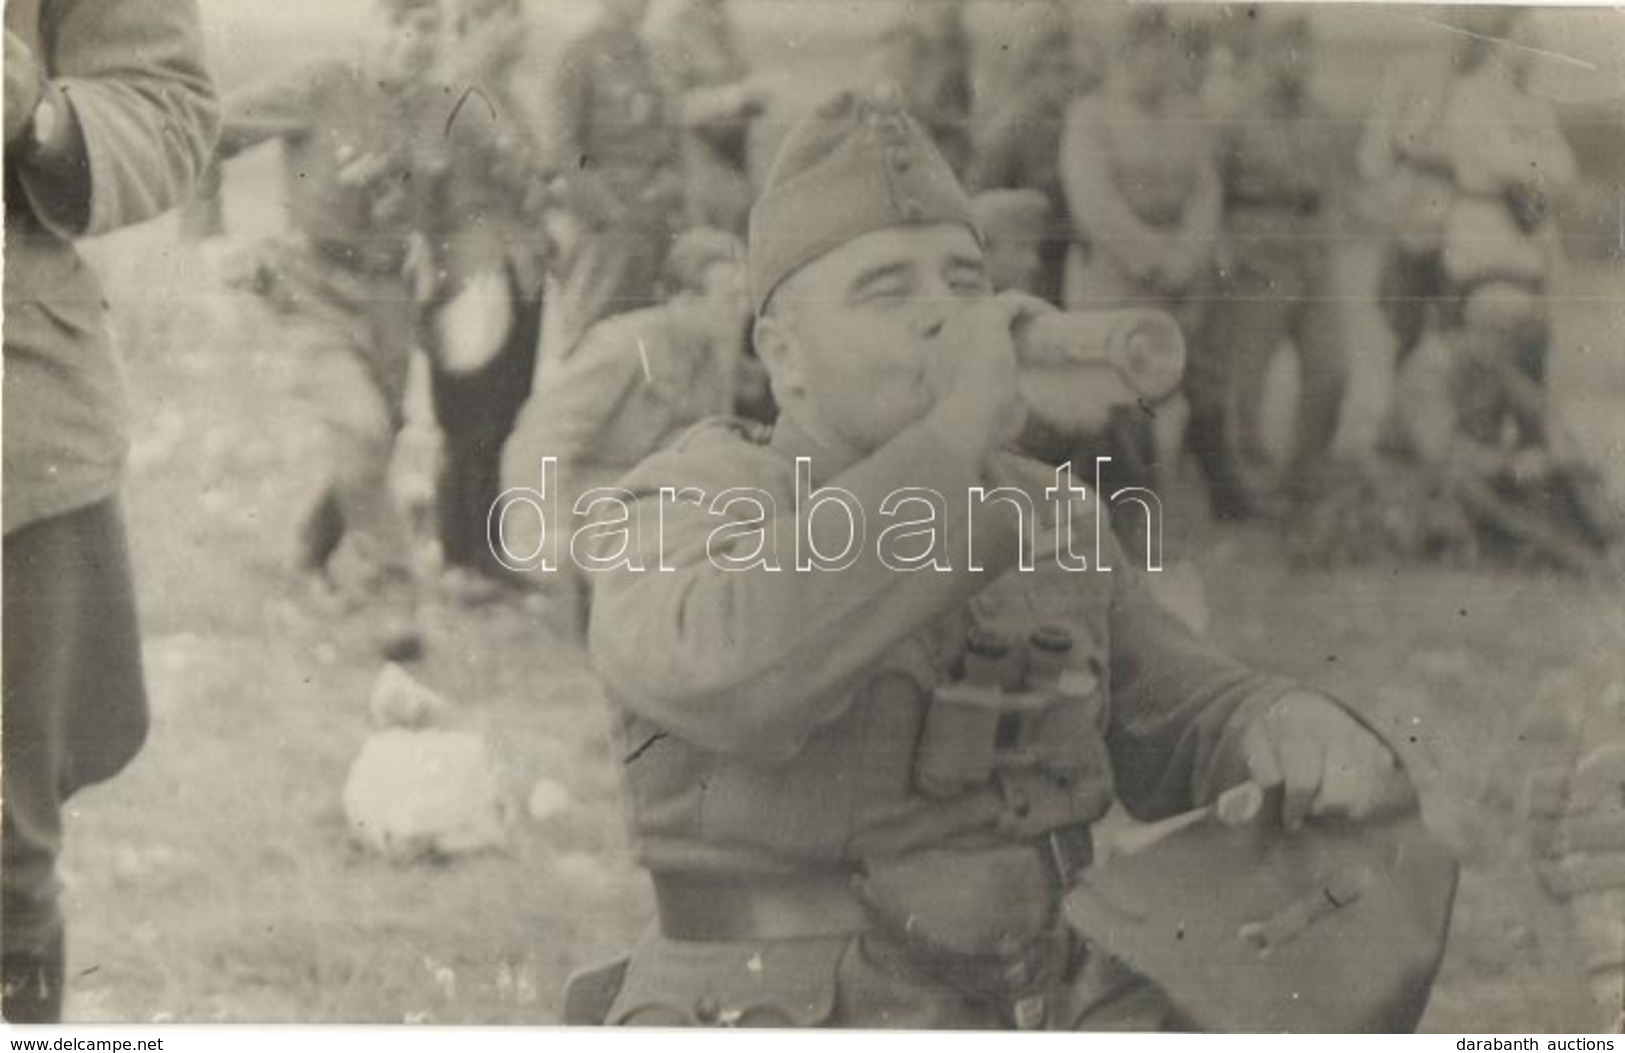 T2/T3 II. Világháborús Ivó Magyar Katona / WWII Hungarian Drinking Soldier, Photo (EK) - Sin Clasificación